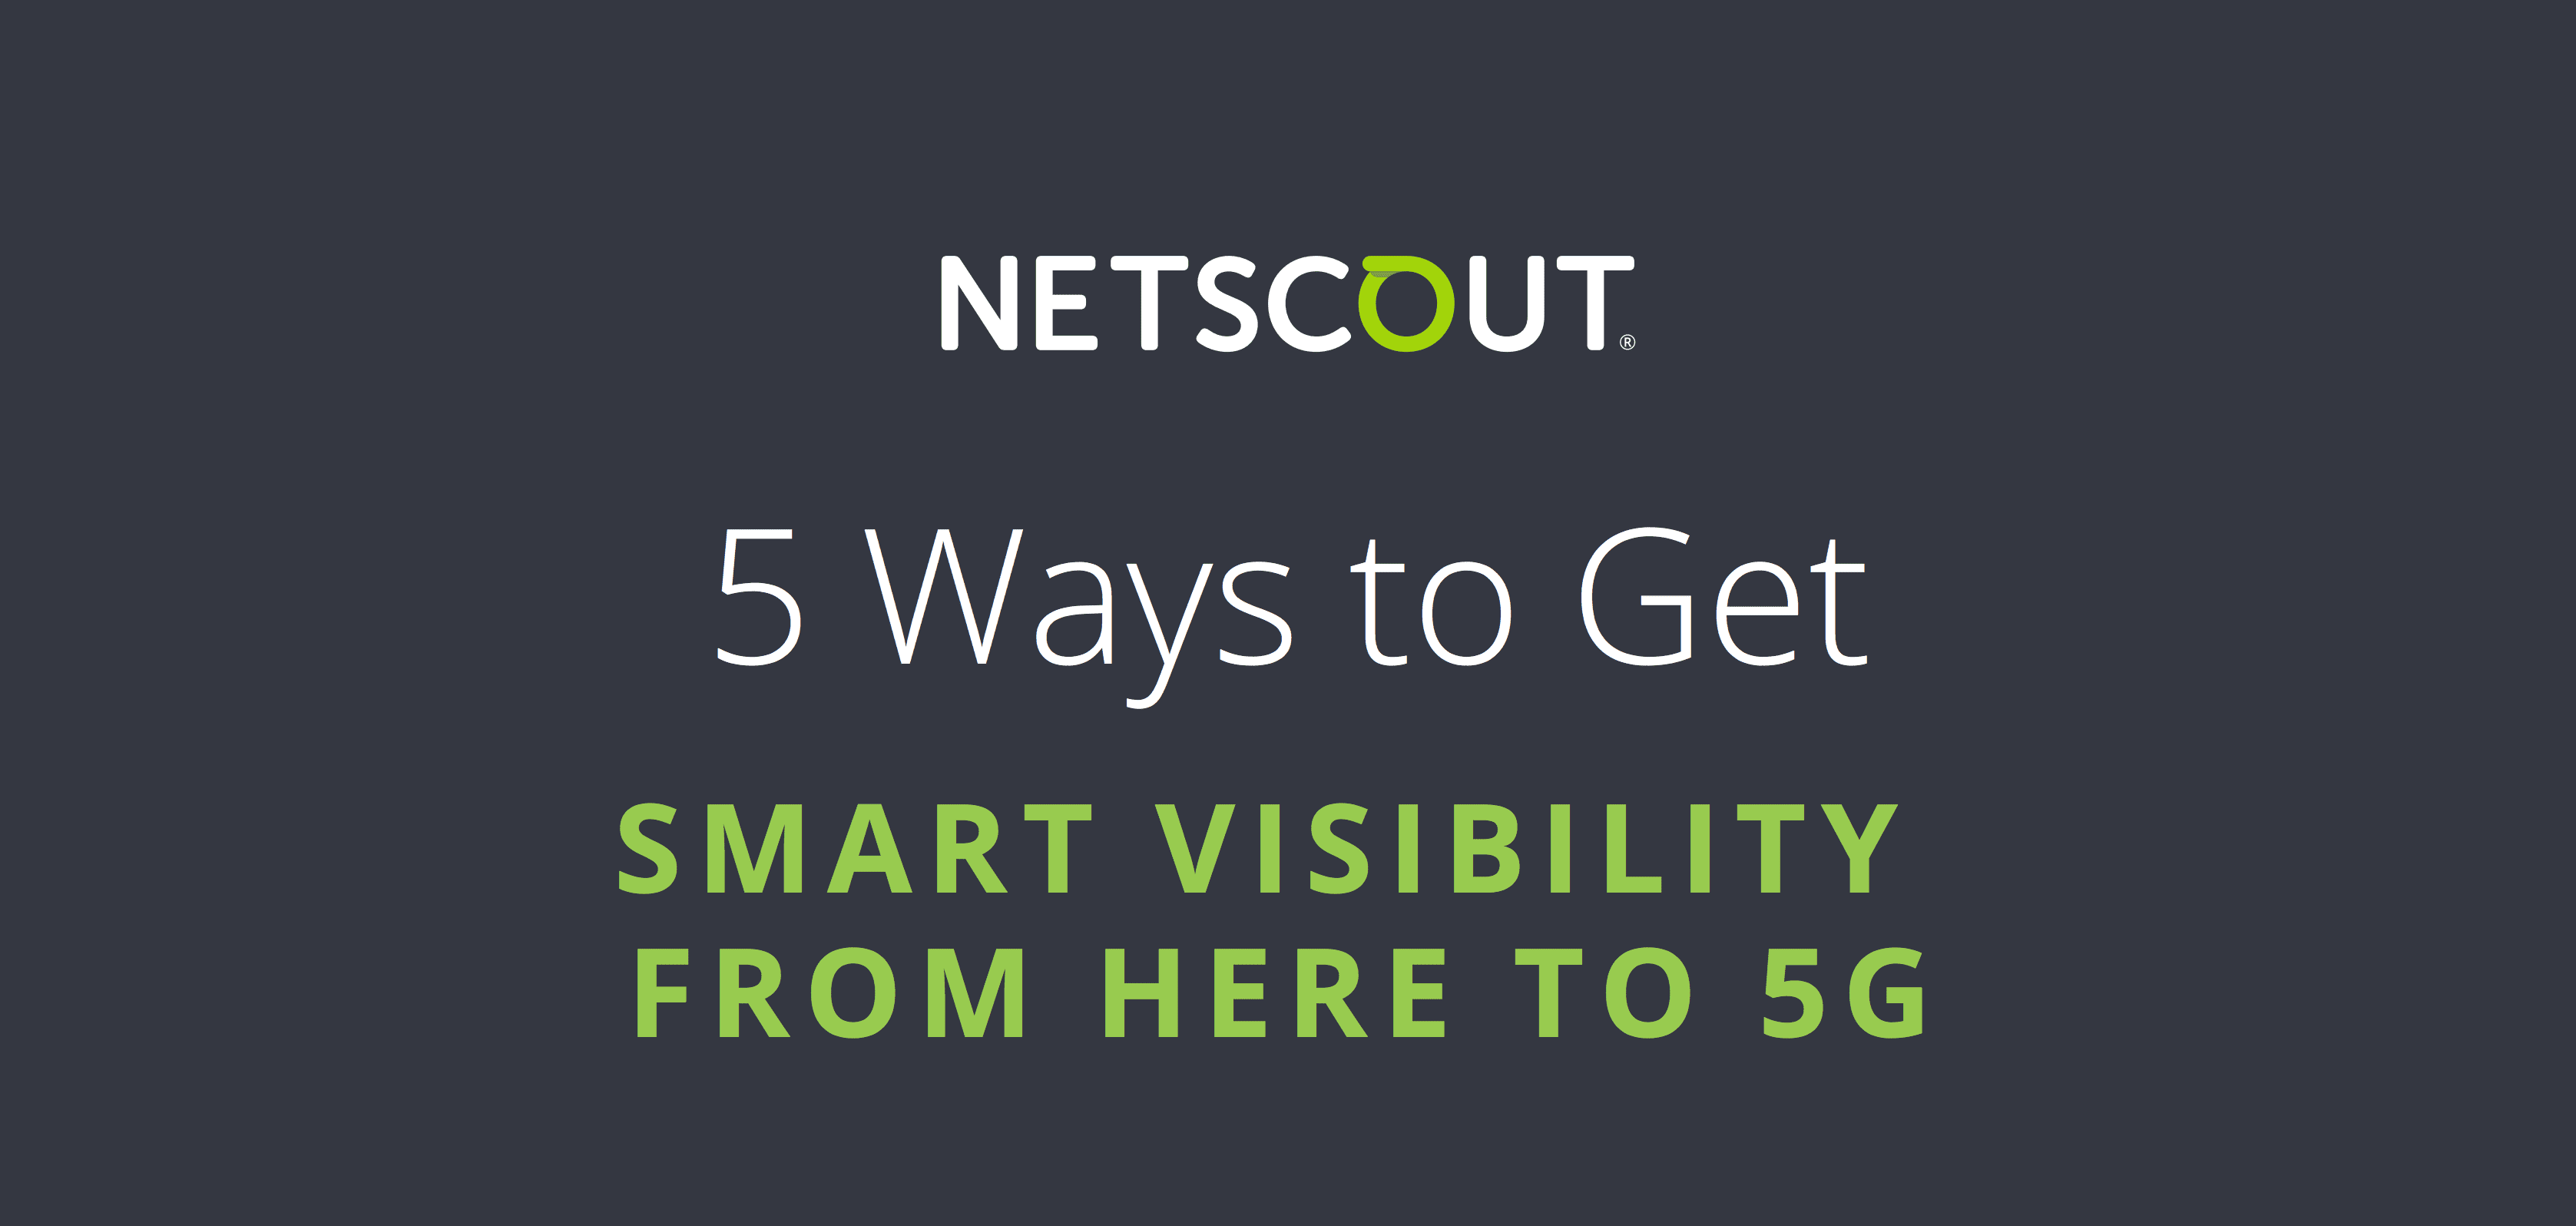 NETSCOUT - Smart Visibilityで現状から5Gへの移行を実現する5つの方法